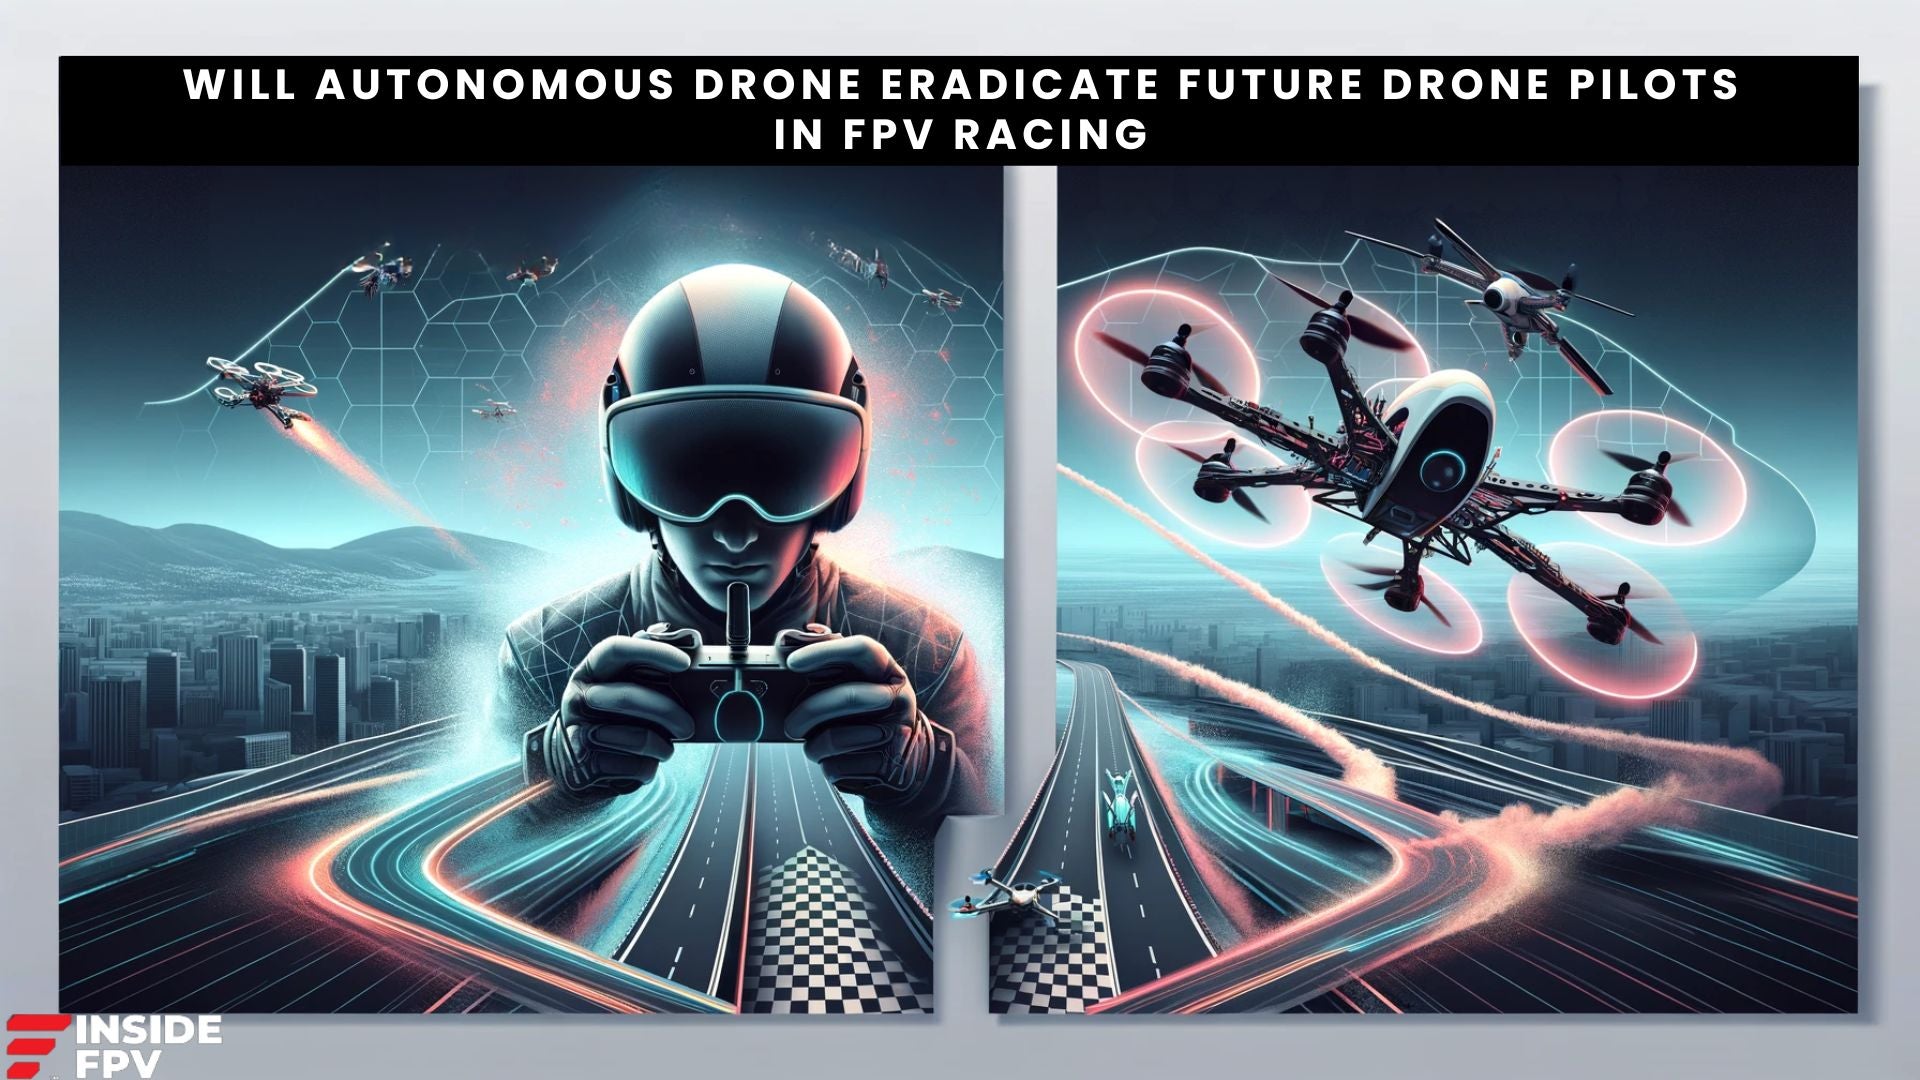 Will Autonomous Drones eradicate future drone pilots in FPV racing?